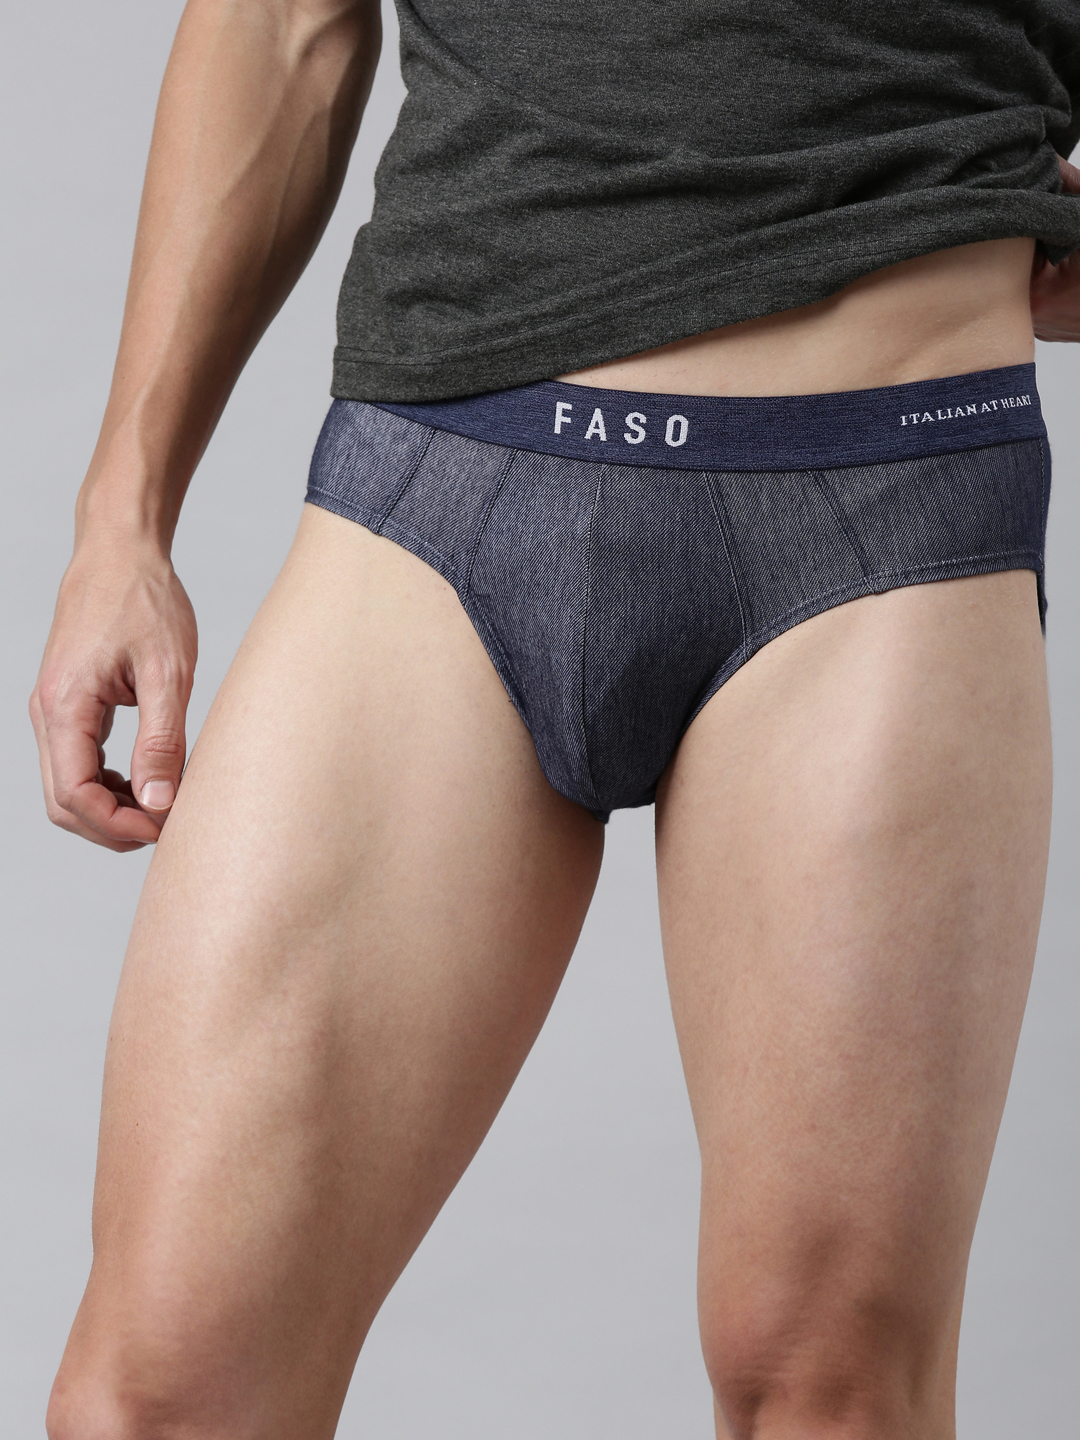 Buy hongqiantai Men Jeans Underwear 3D Cowboy Printed Men's Boxer Briefs,  Fake Jean 1 XL at Amazon.in